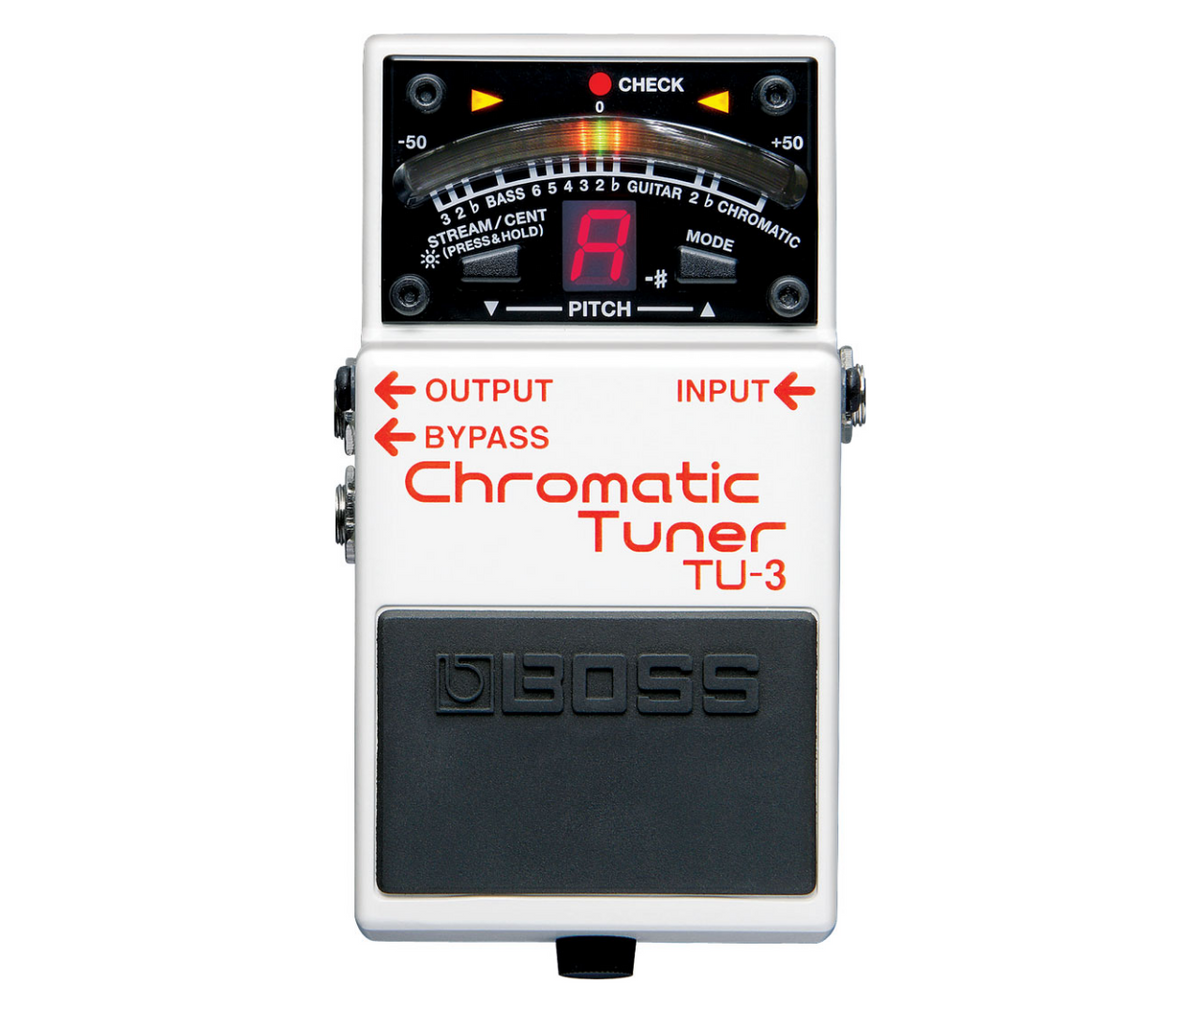 BOSS TU-3 Chromatic Tuner Best Guitar Tuner with 21-segment LED Meter with High-Brightness Mode